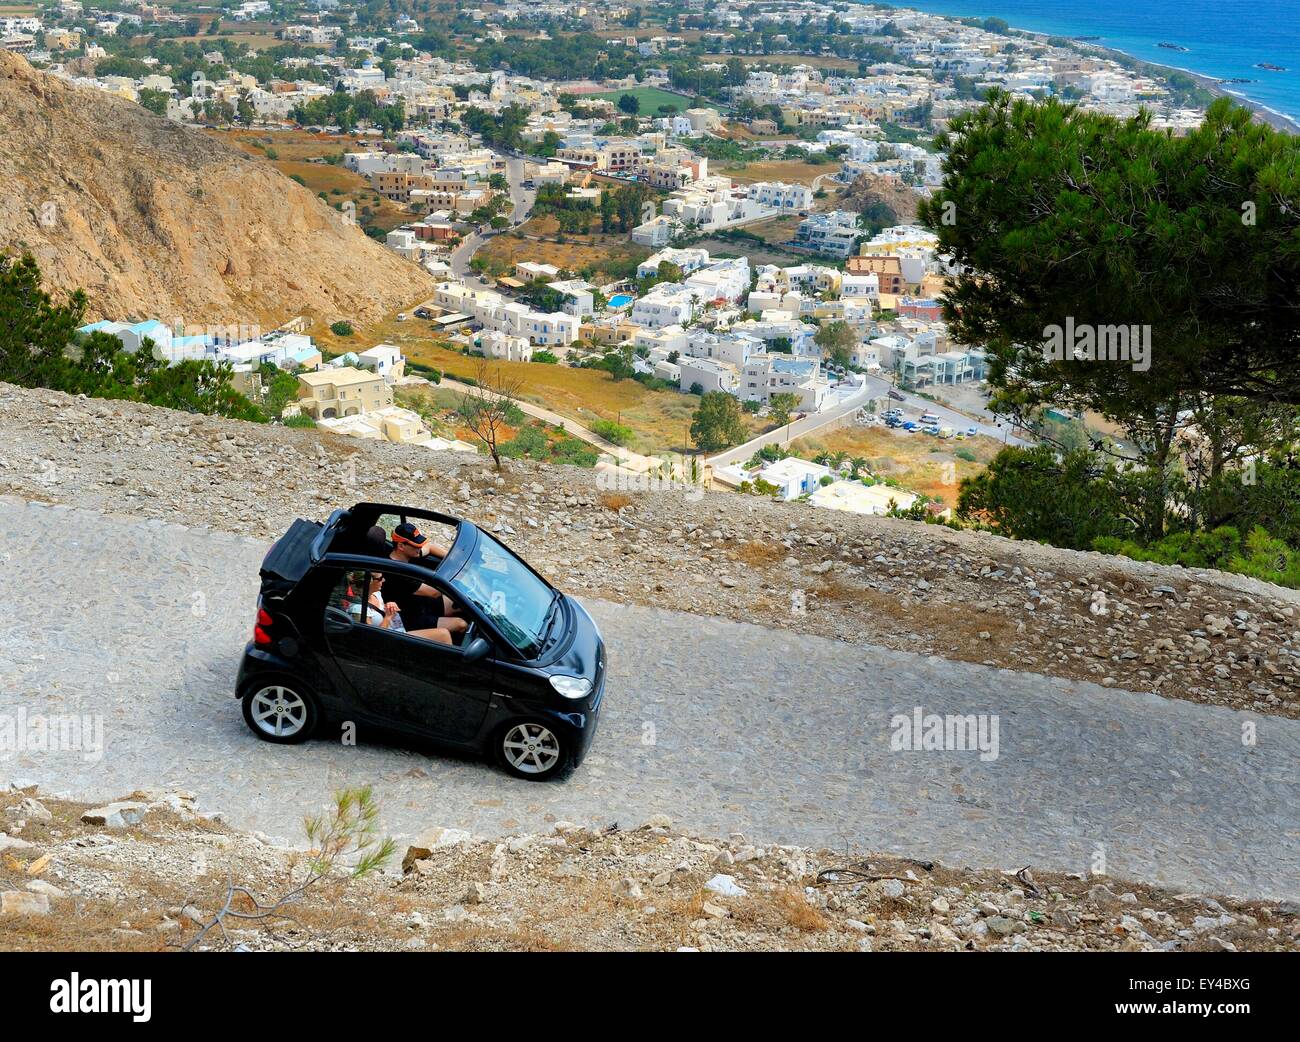 A black smartcar holiday hire vehicle on the winding road up to ancient Thira,Kamari,Santorini,Greece Stock Photo